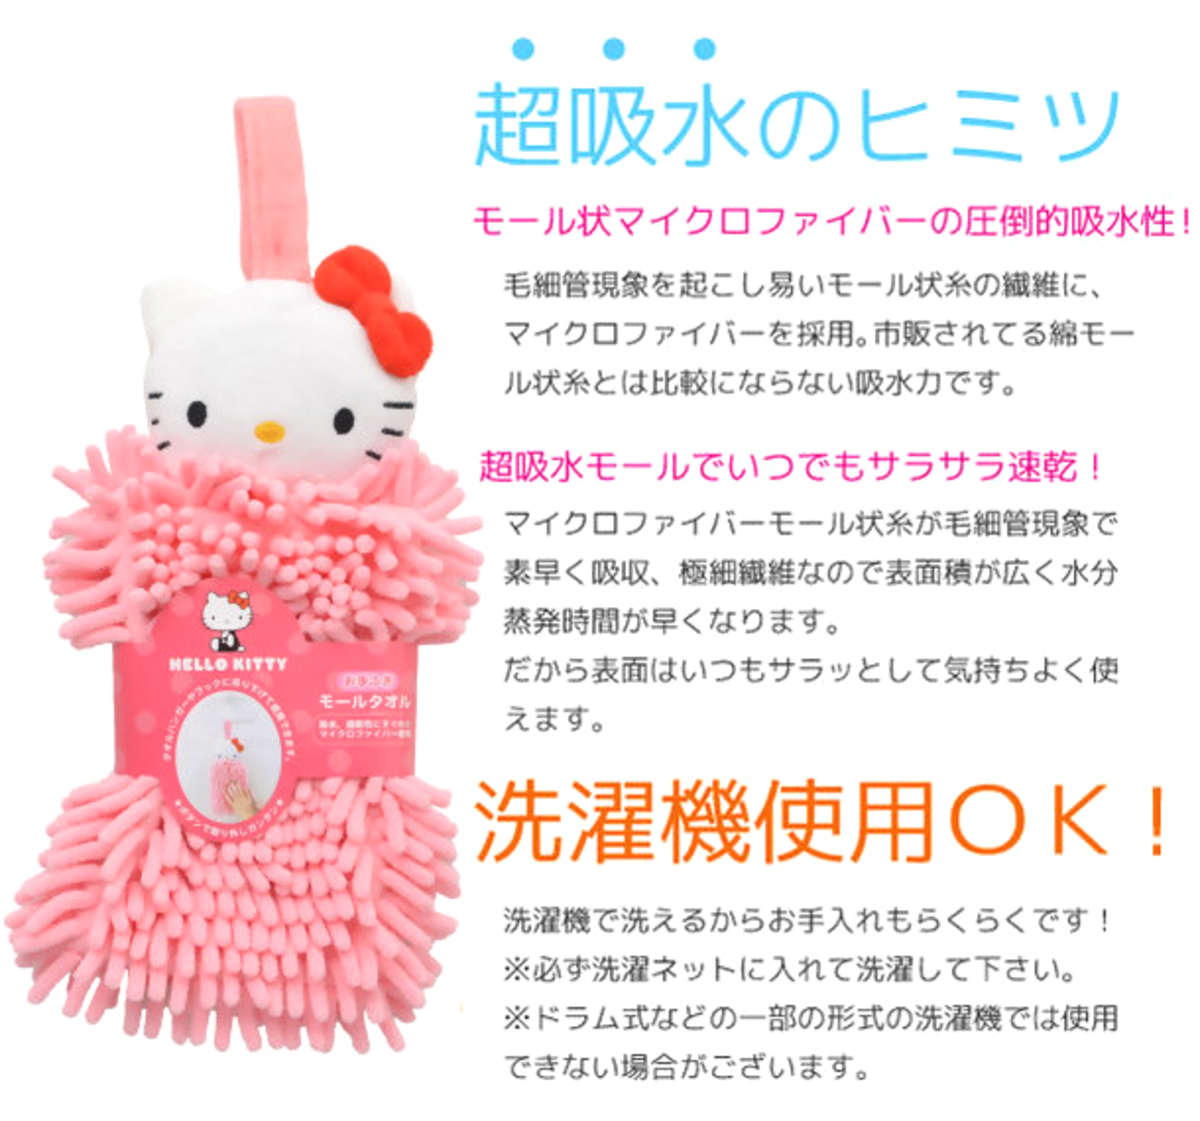 SANRIO | (Hello Kitty) 日本Sanrio卡通抹手巾| HKTVmall 香港最大網購平台